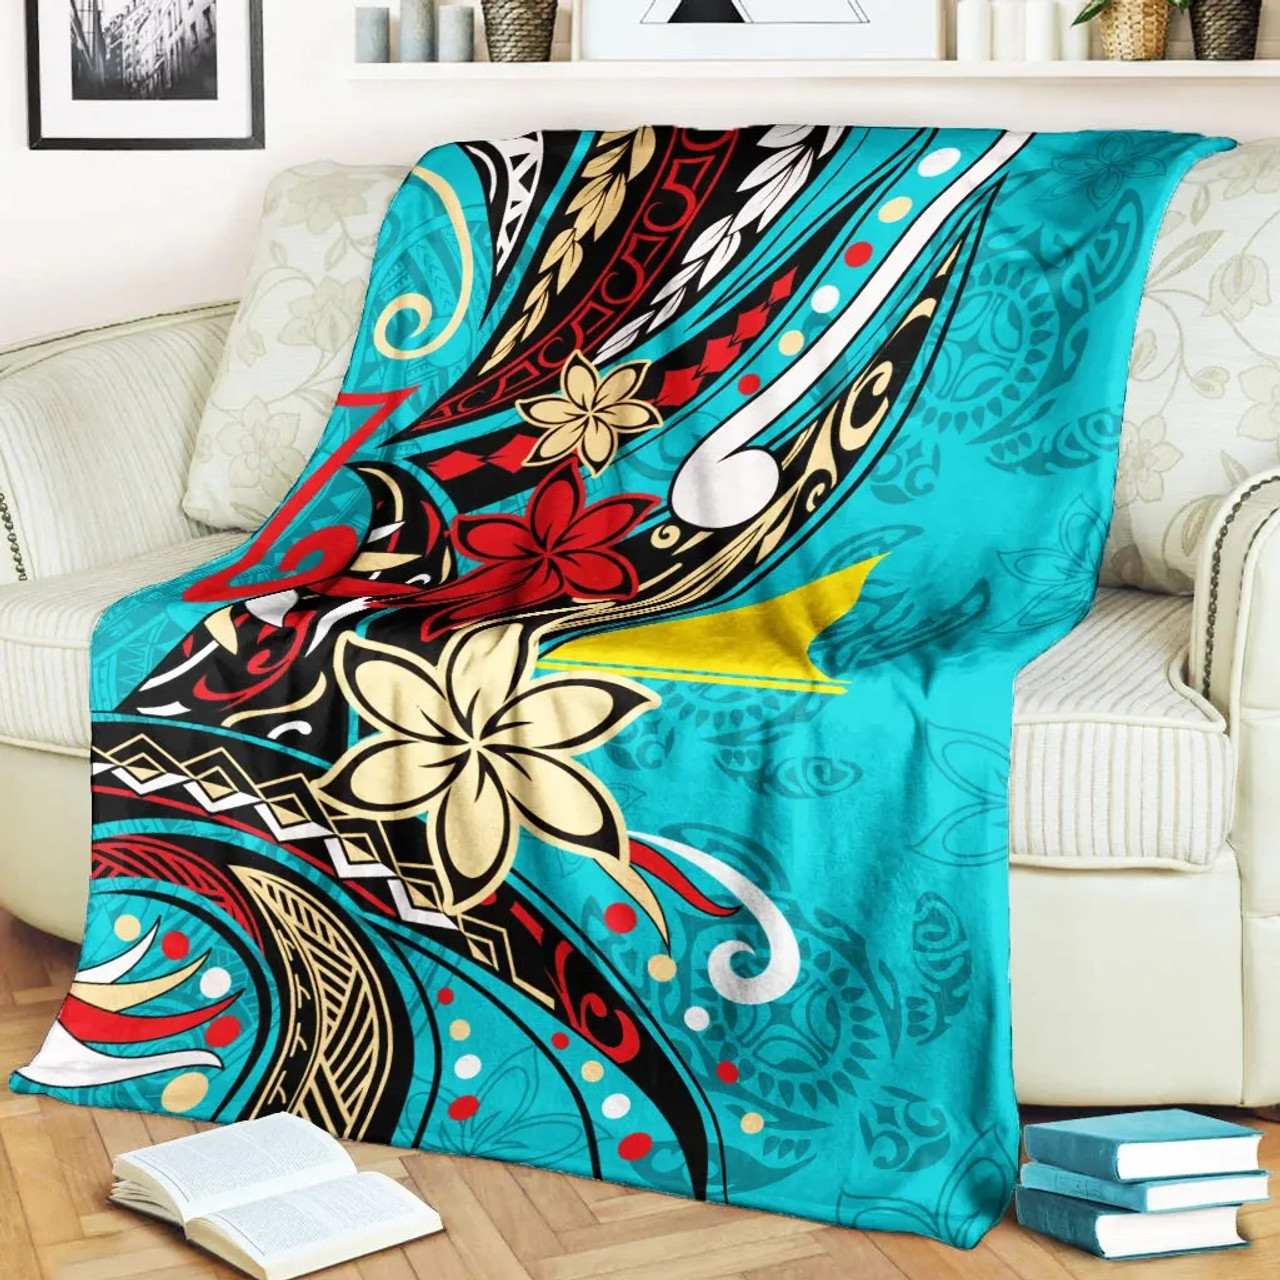 Tokelau Premium Blanket - Tribal Flower With Special Turtles Blue Color 2